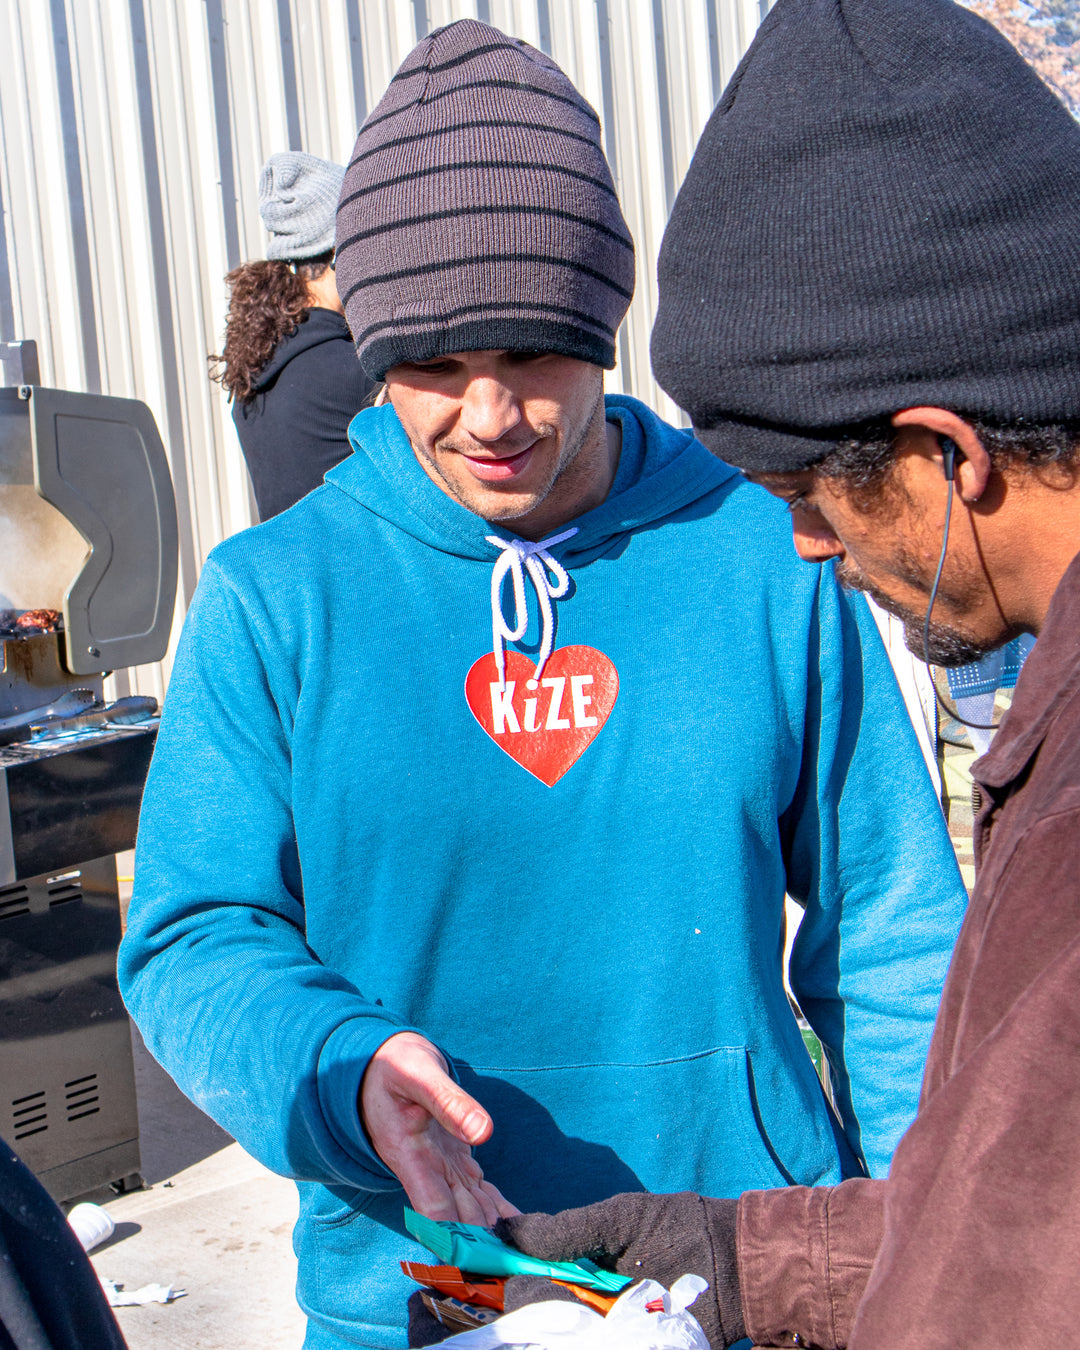 Owner Jeff Ragan handing out free KiZE bars